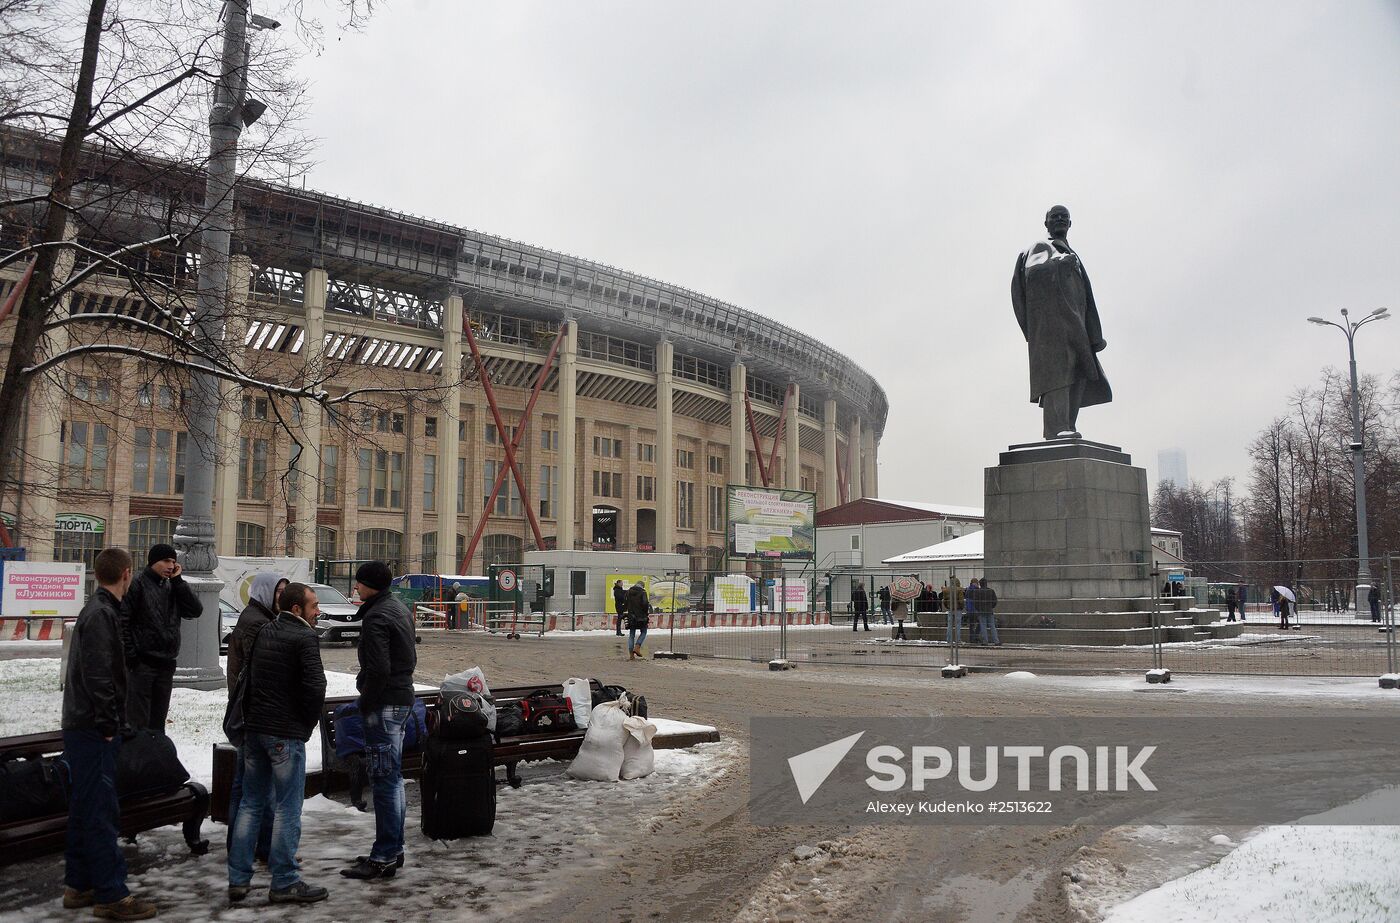 FIFA and Russia 2018 Organizing Committee experts inspect Luzhniki Stadium